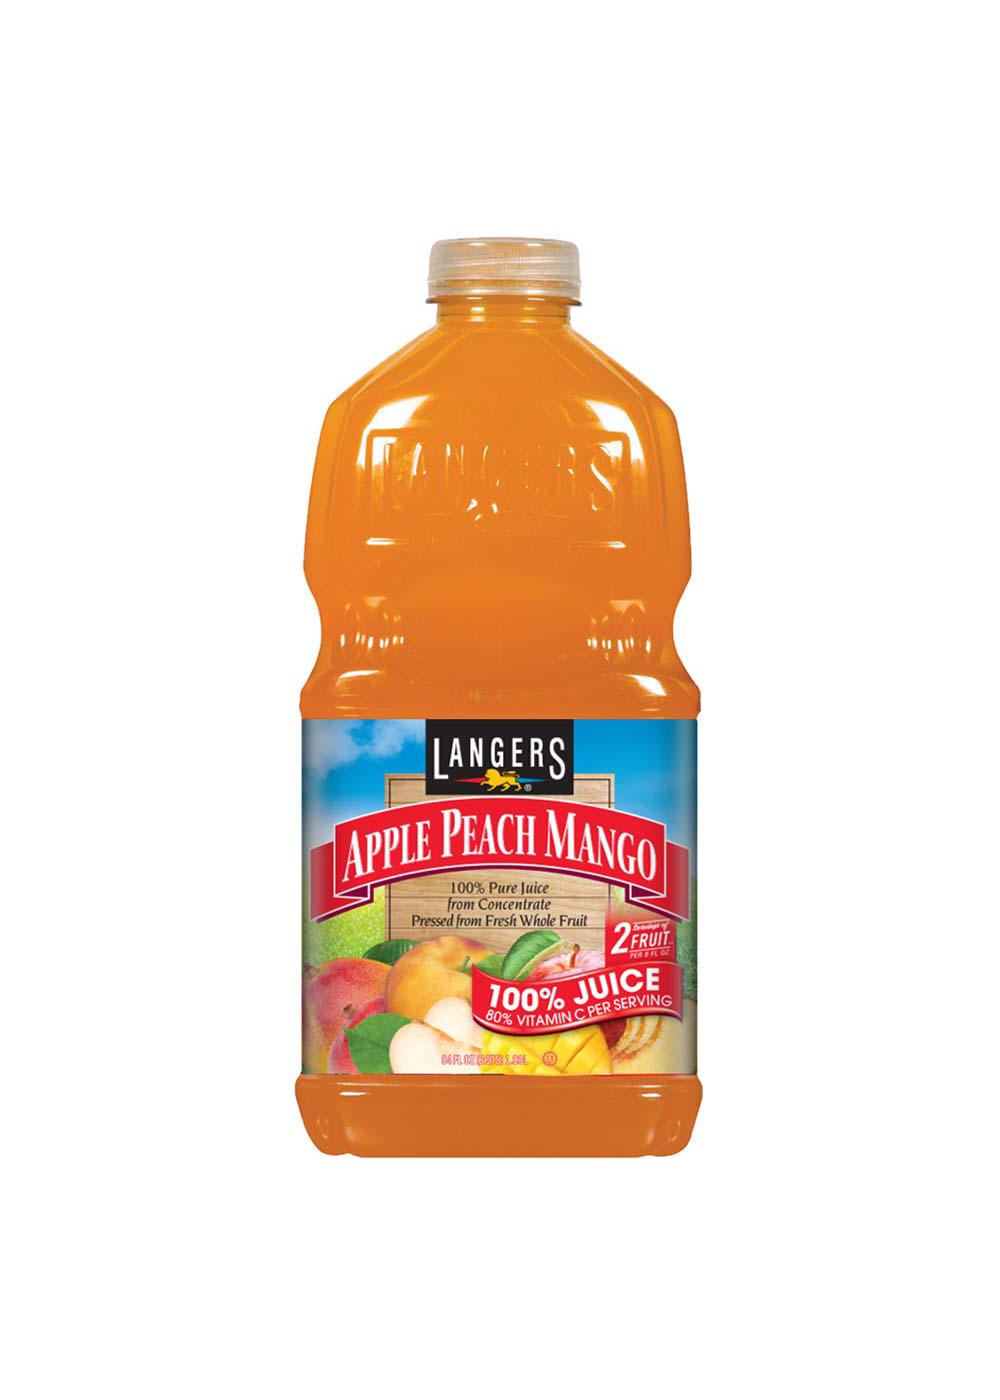 Langers Pure Juice - Apple Peach Mango; image 1 of 2